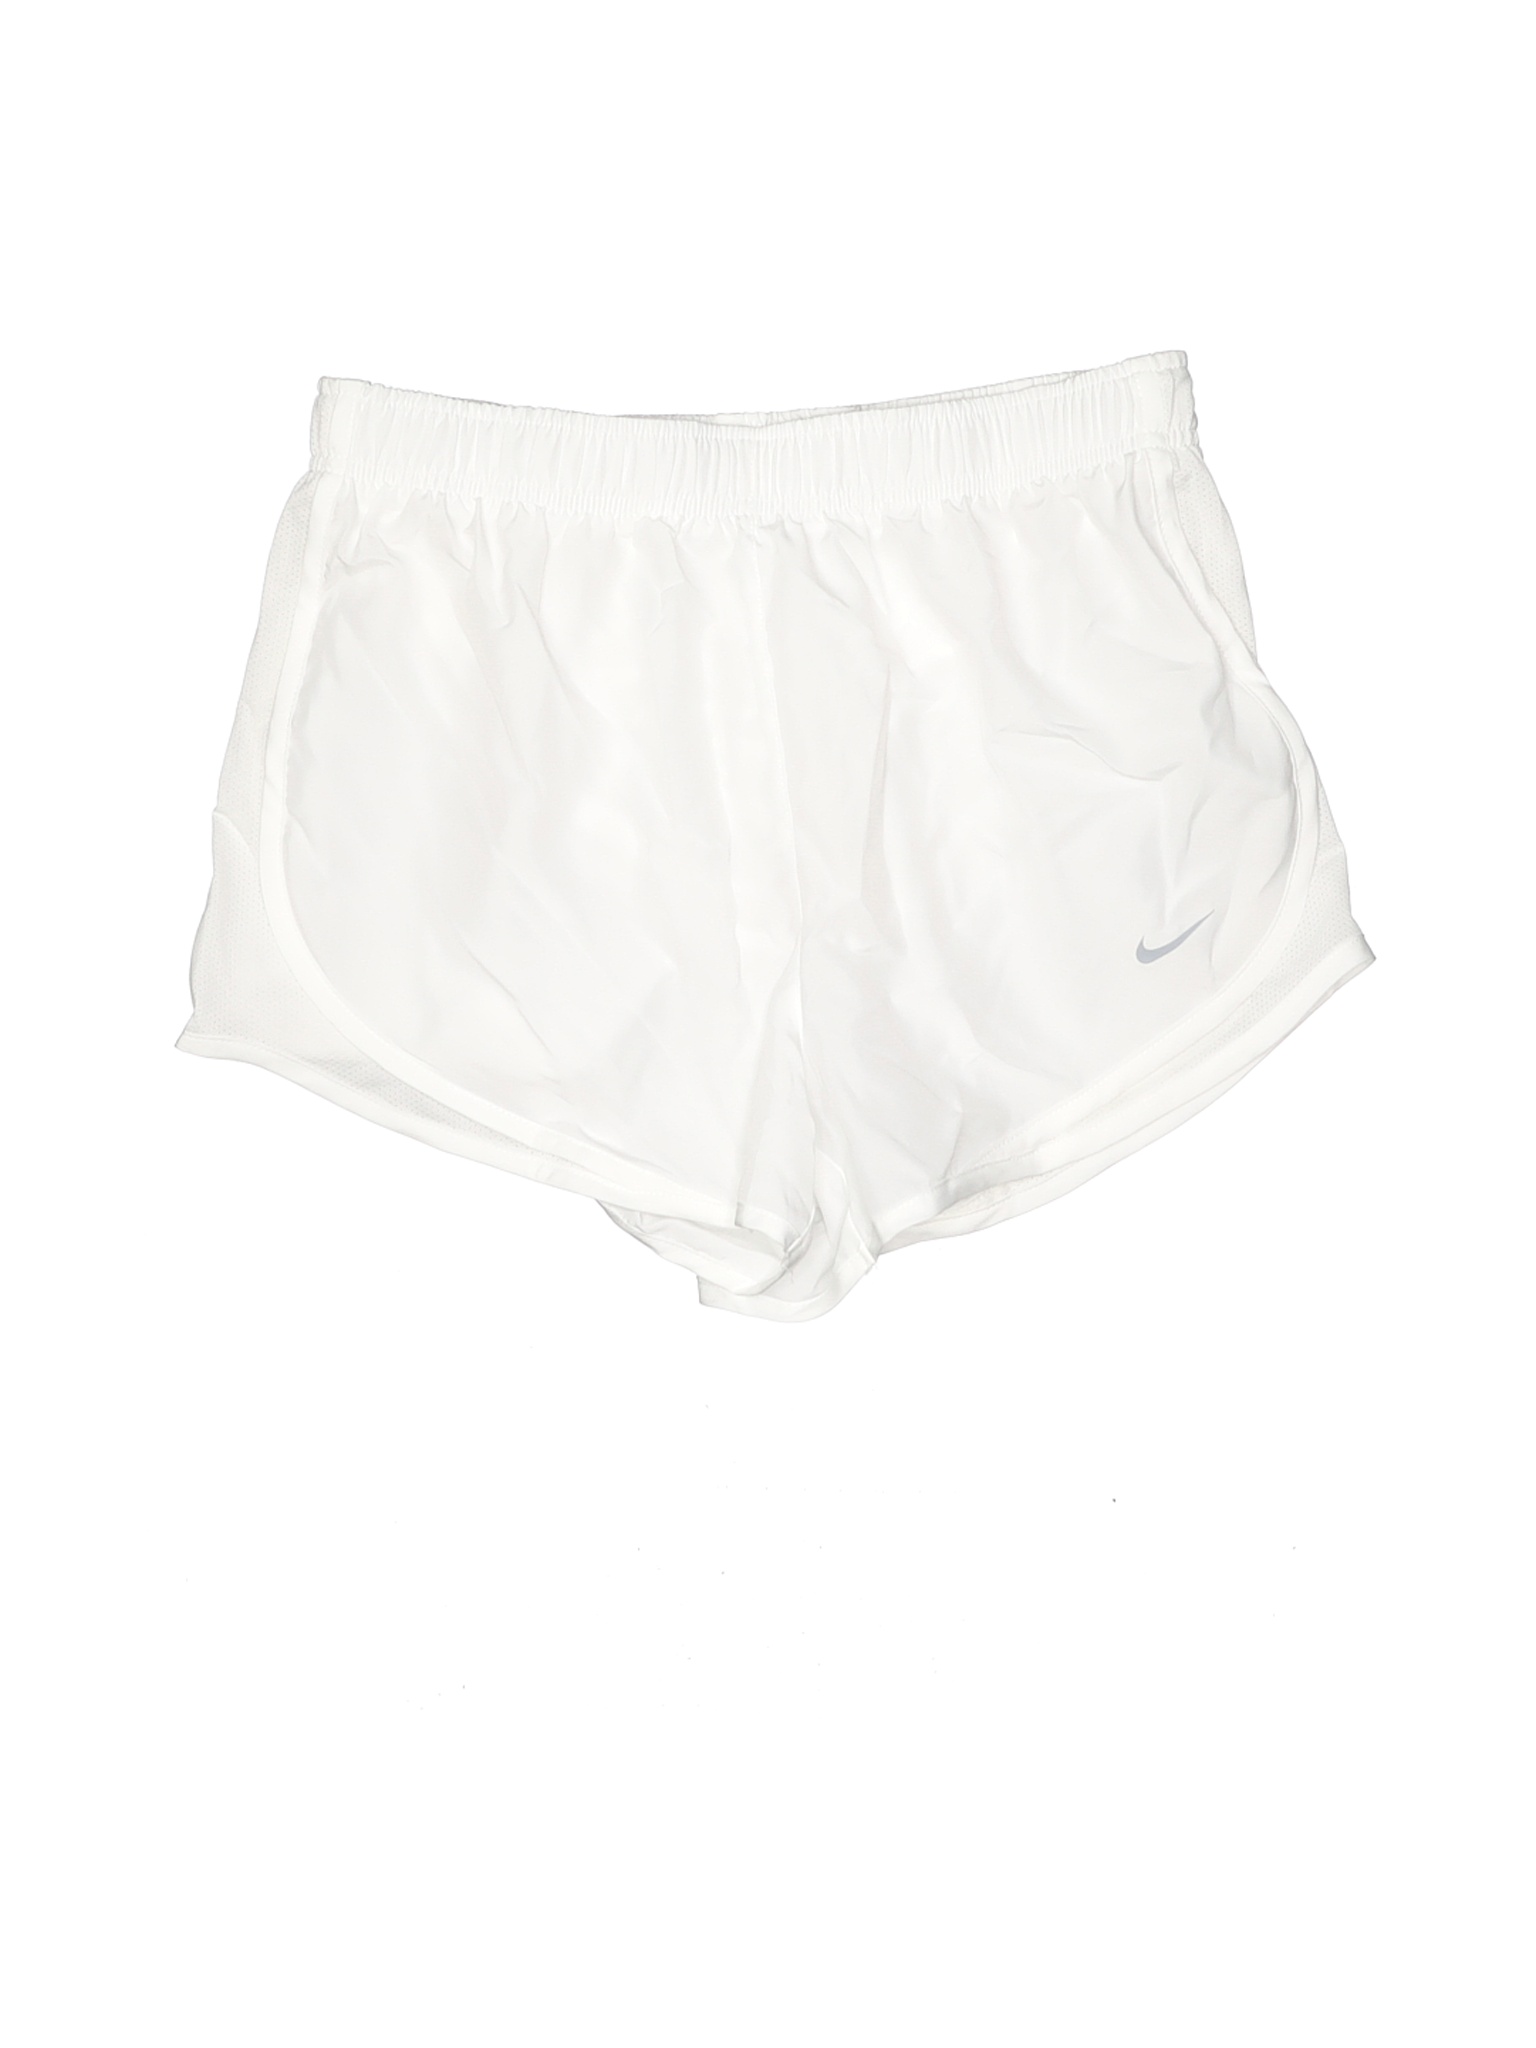 Nike Women White Athletic Shorts M | eBay